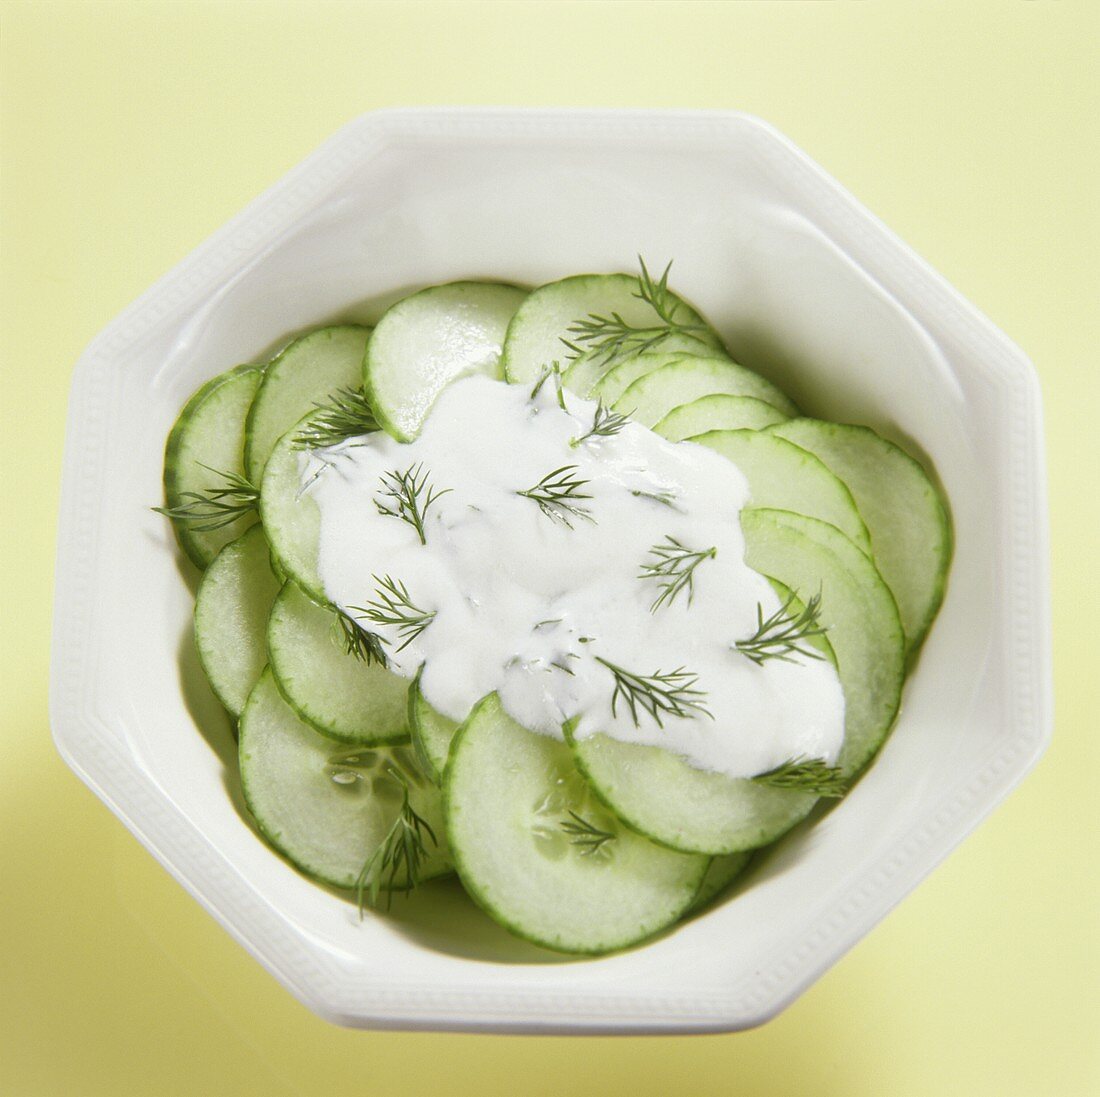 Cucumber salad; yoghurt and dill